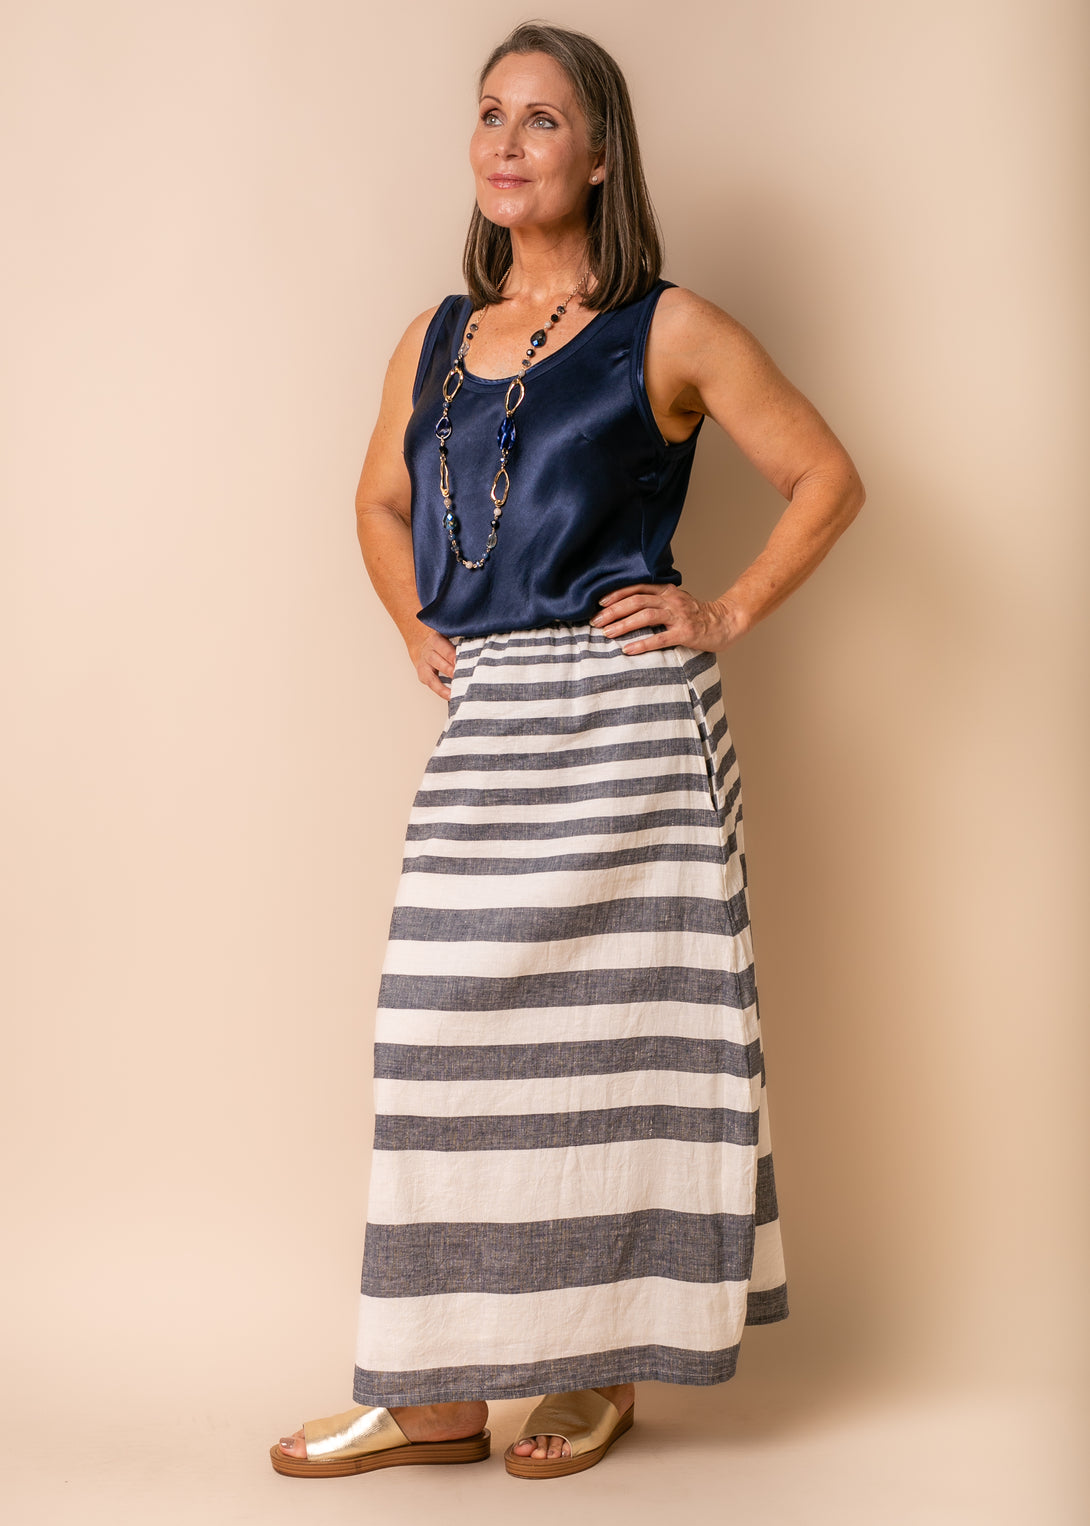 Sinclair Linen Blend Skirt in Navy - Imagine Fashion